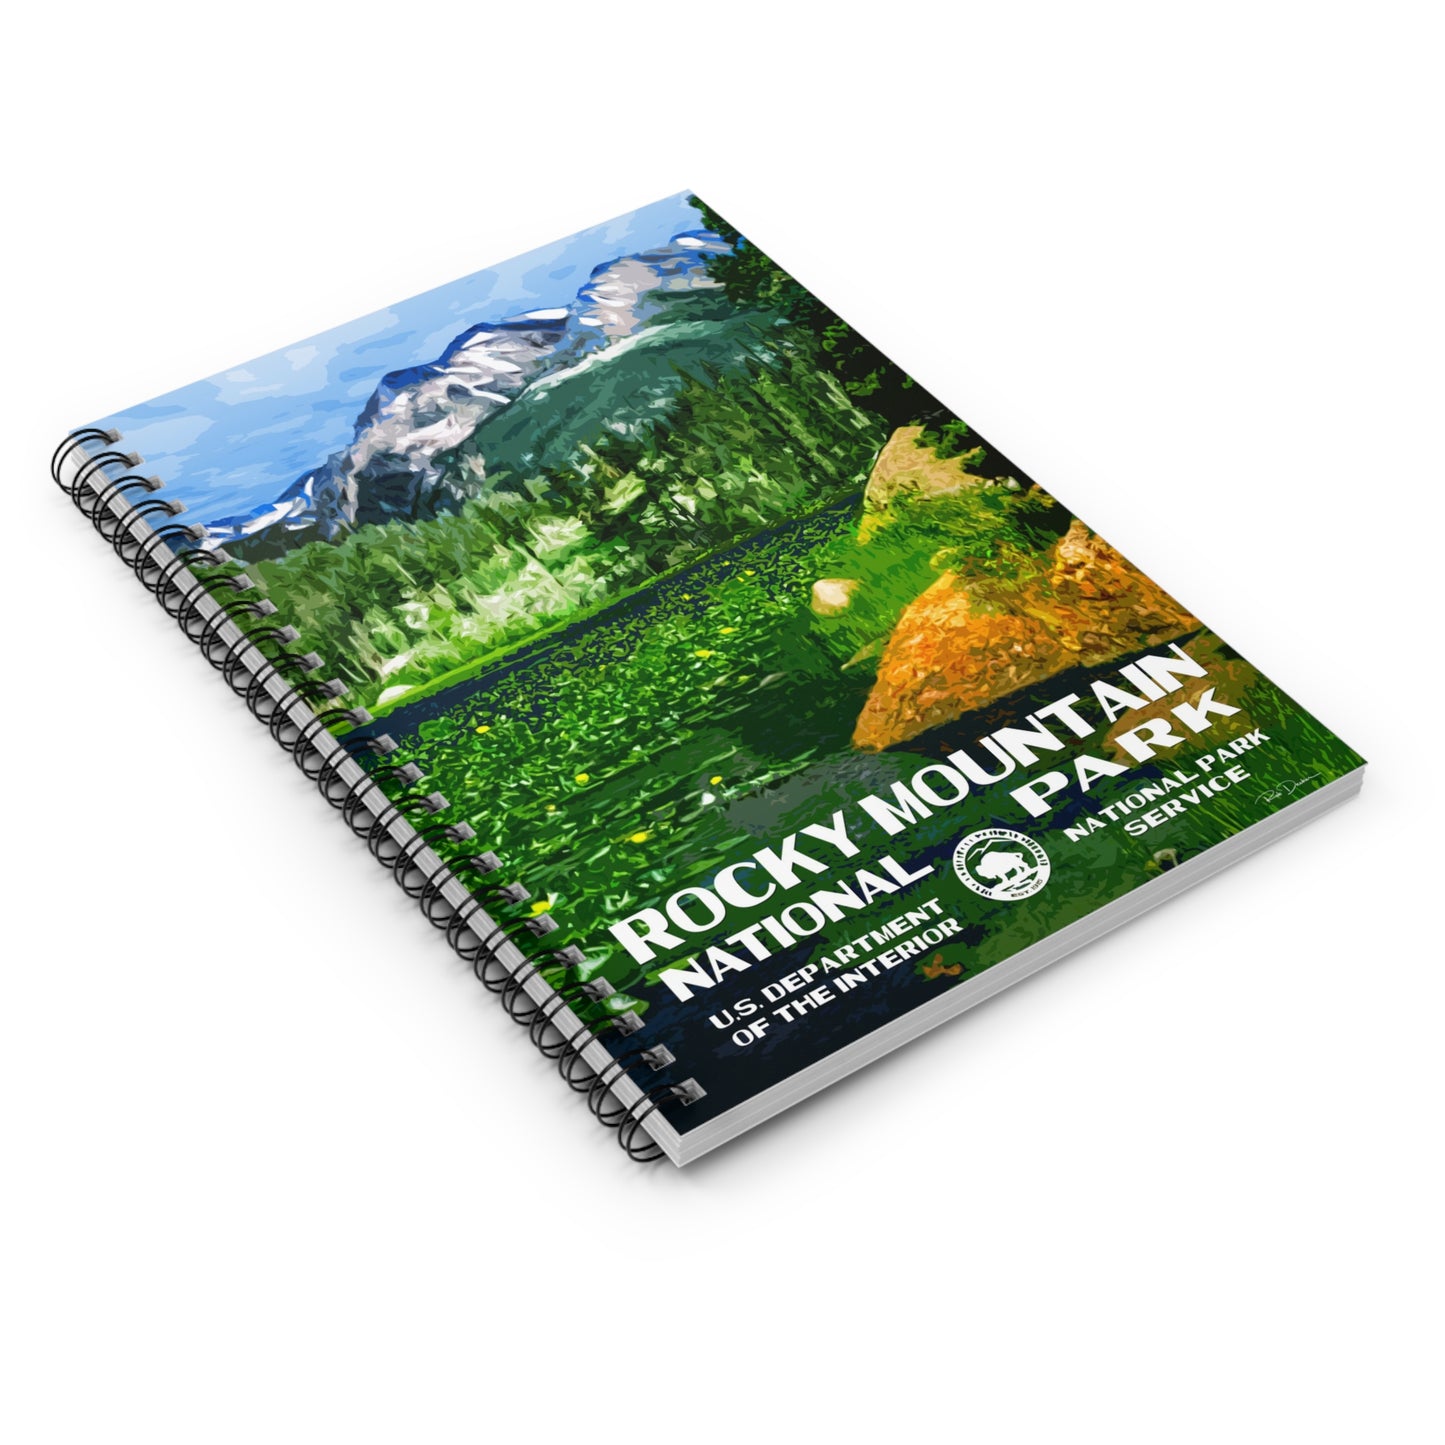 Rocky Mountain National Park (Cub Lake) Field Journal